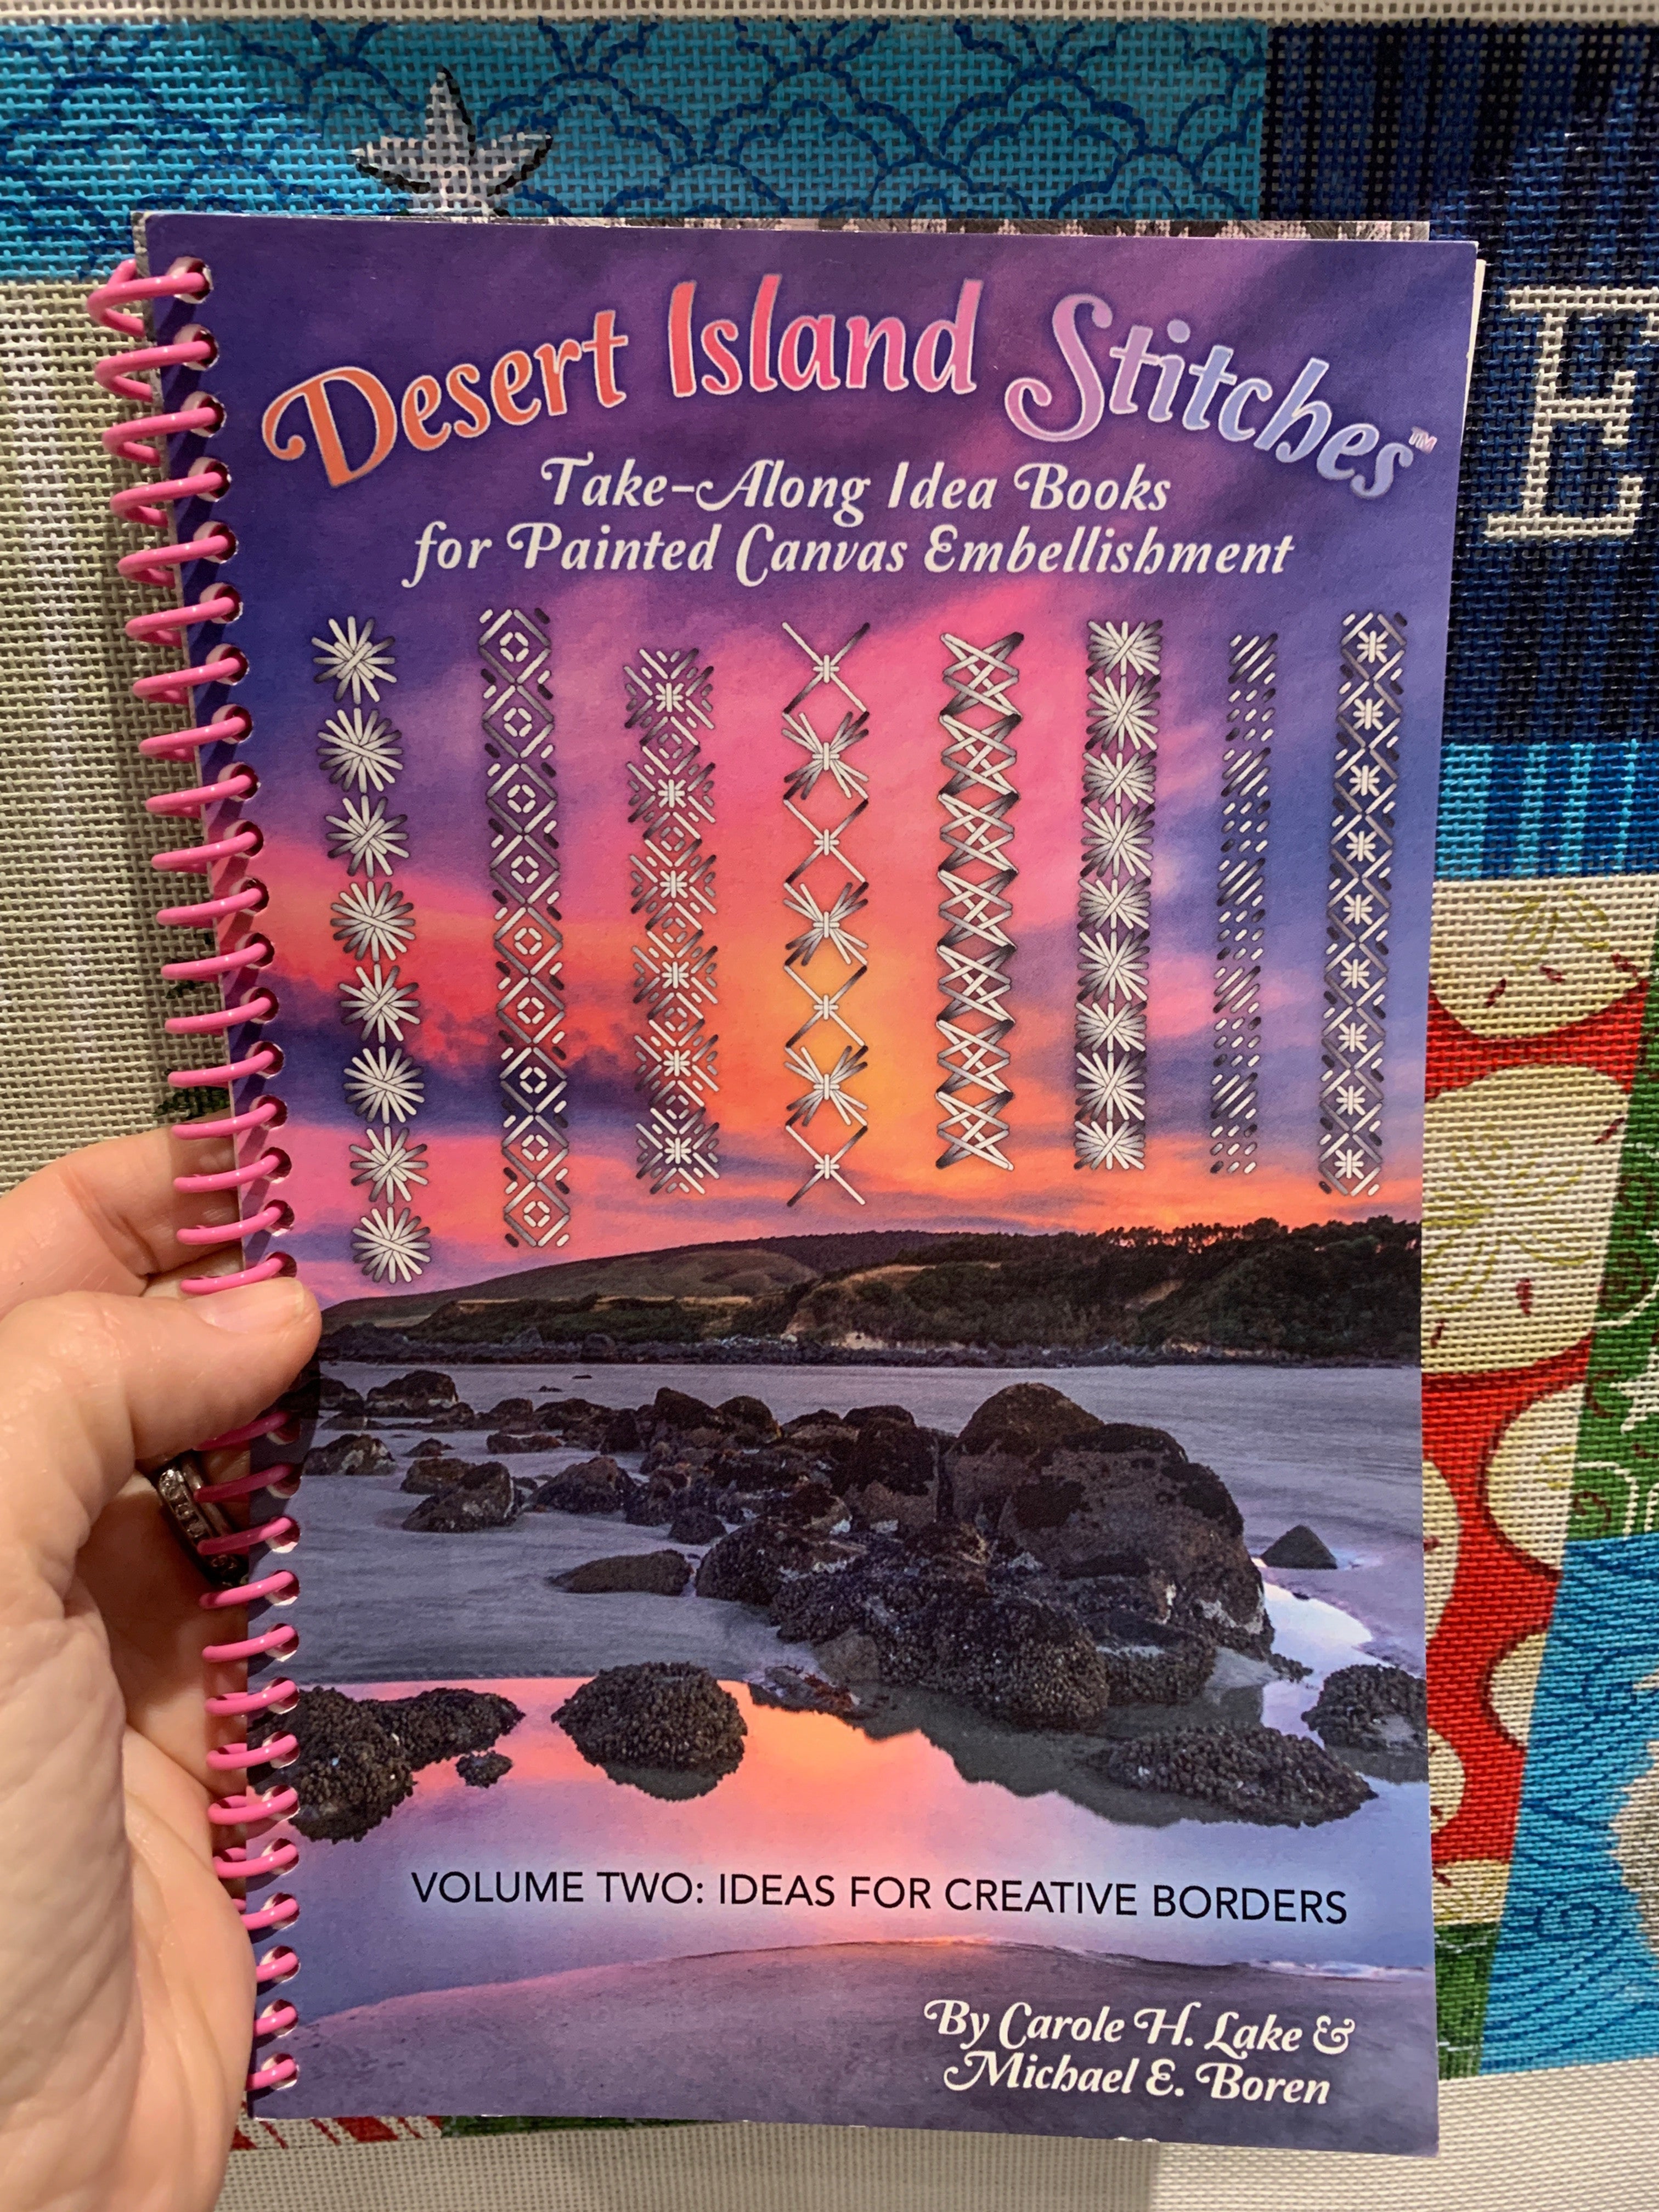 Desert Island Stitches Vol 2 for Creative Borders